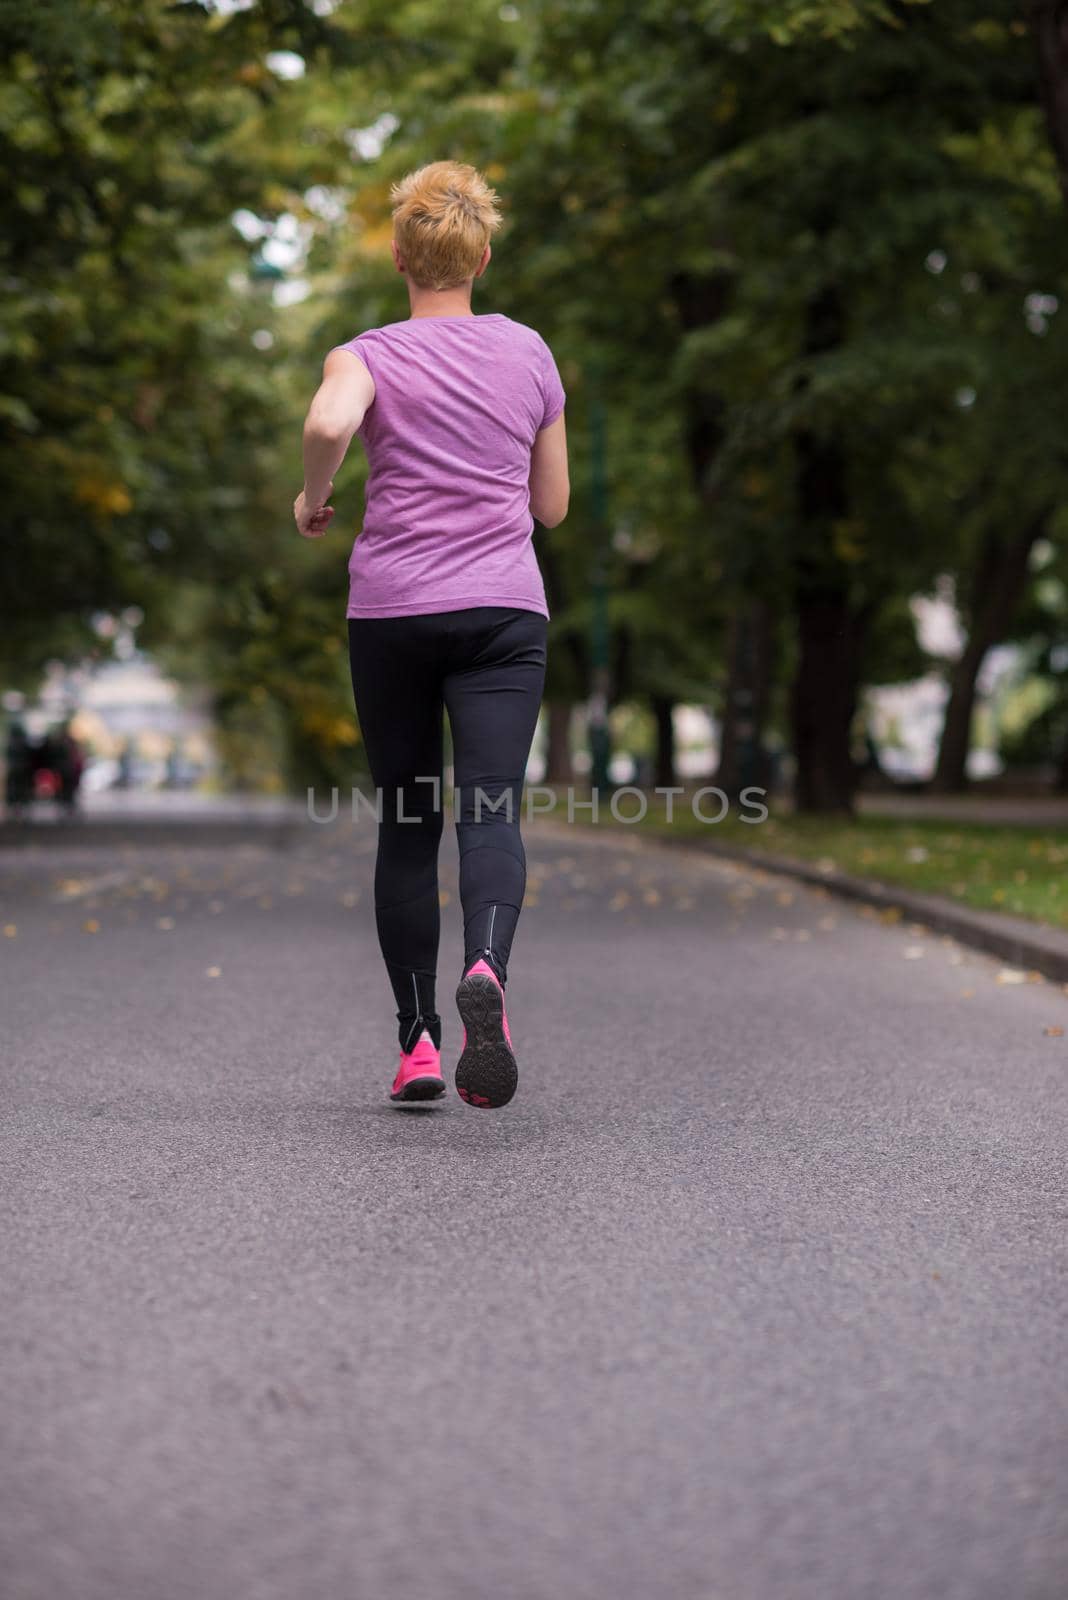 sporty female runner training for marathon by dotshock